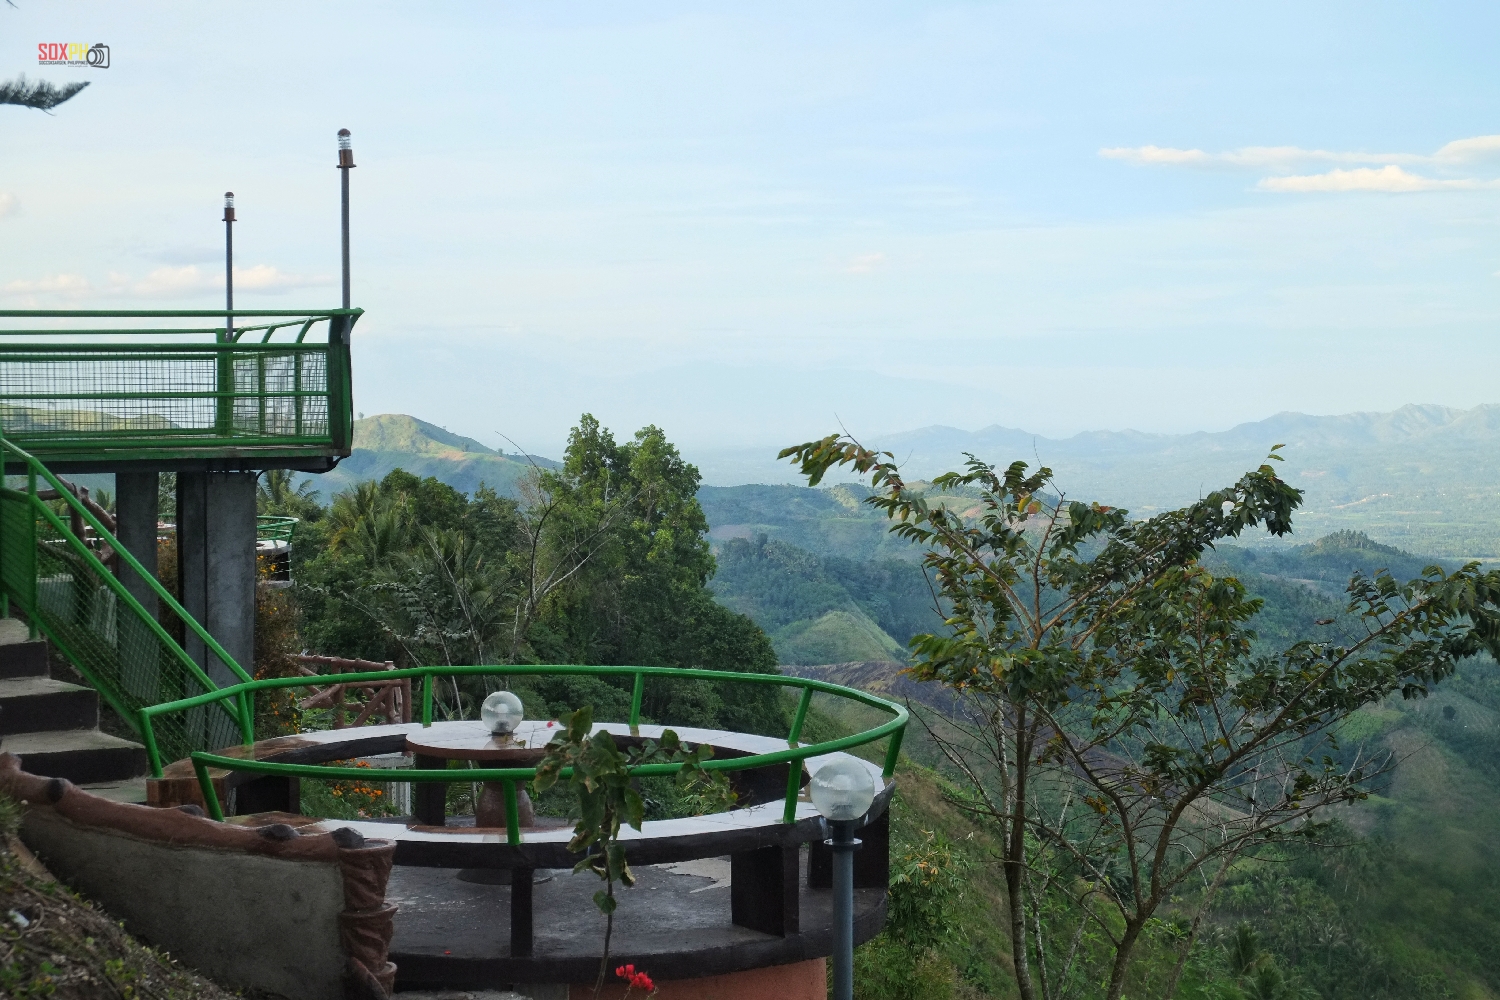 Kalonbarak Skyline Ridge in Malungon, Sarangani